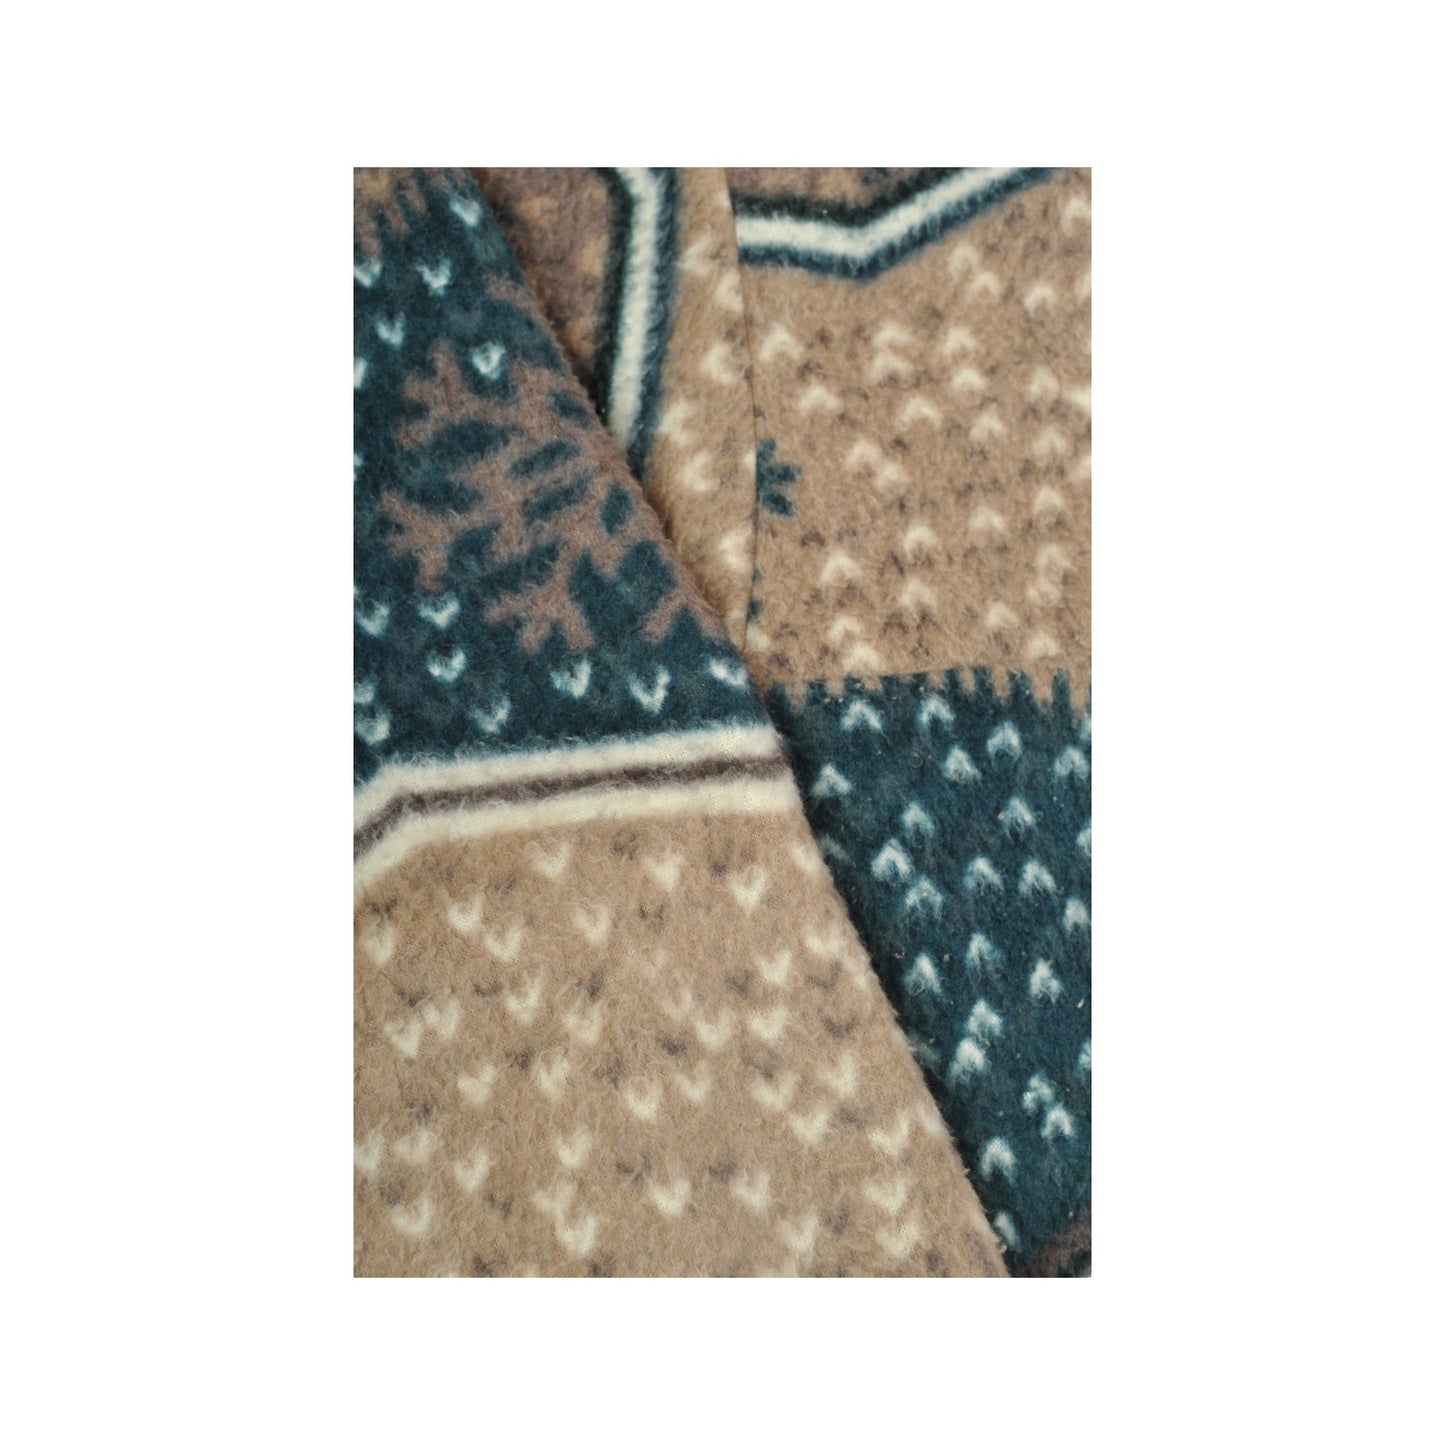 Vintage Fleece Jacket Retro Pattern Beige/Green Ladies Medium